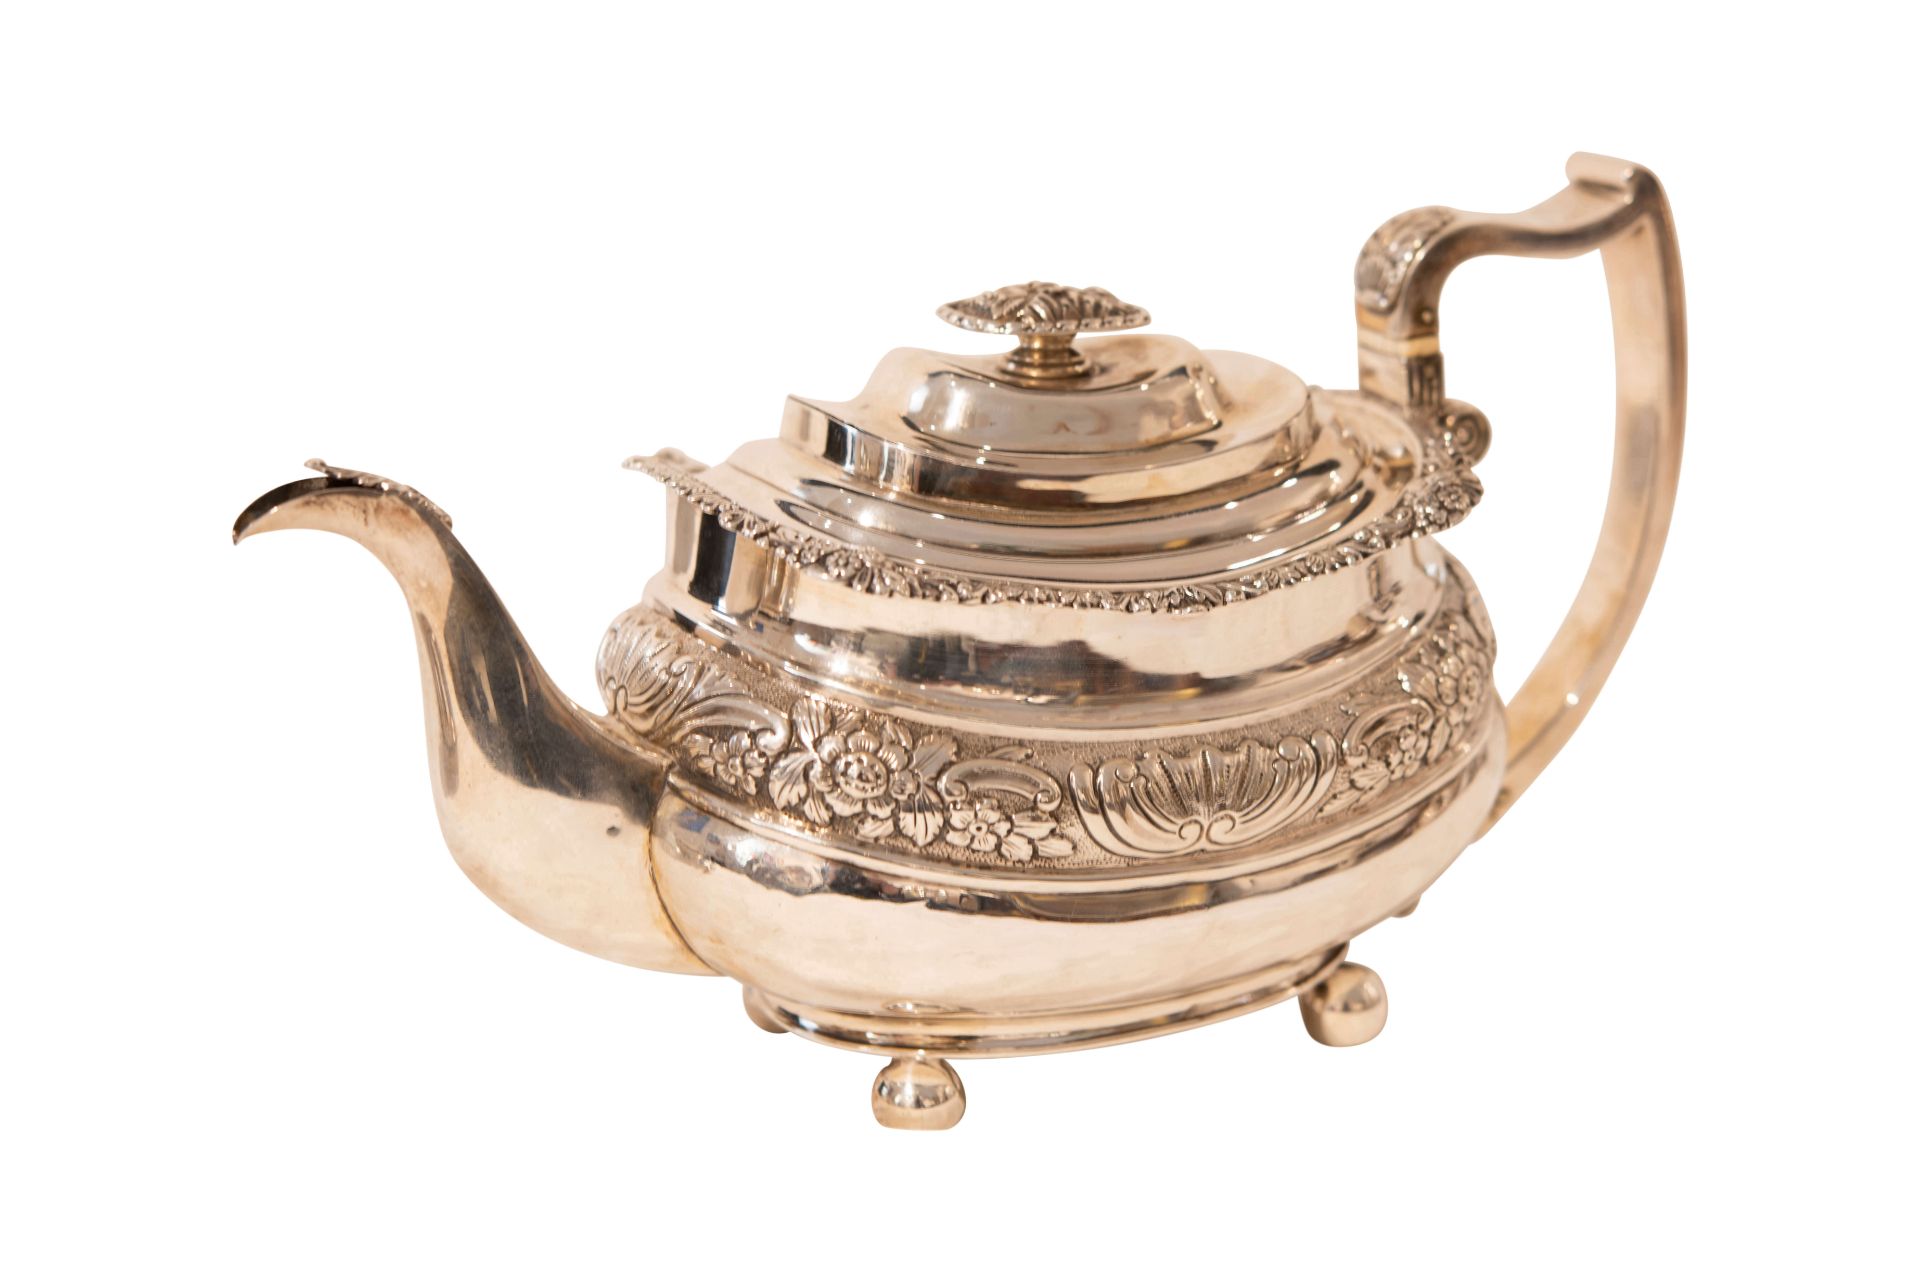 Massive antike Teekanne |Massive Antique Teapot - Image 3 of 5